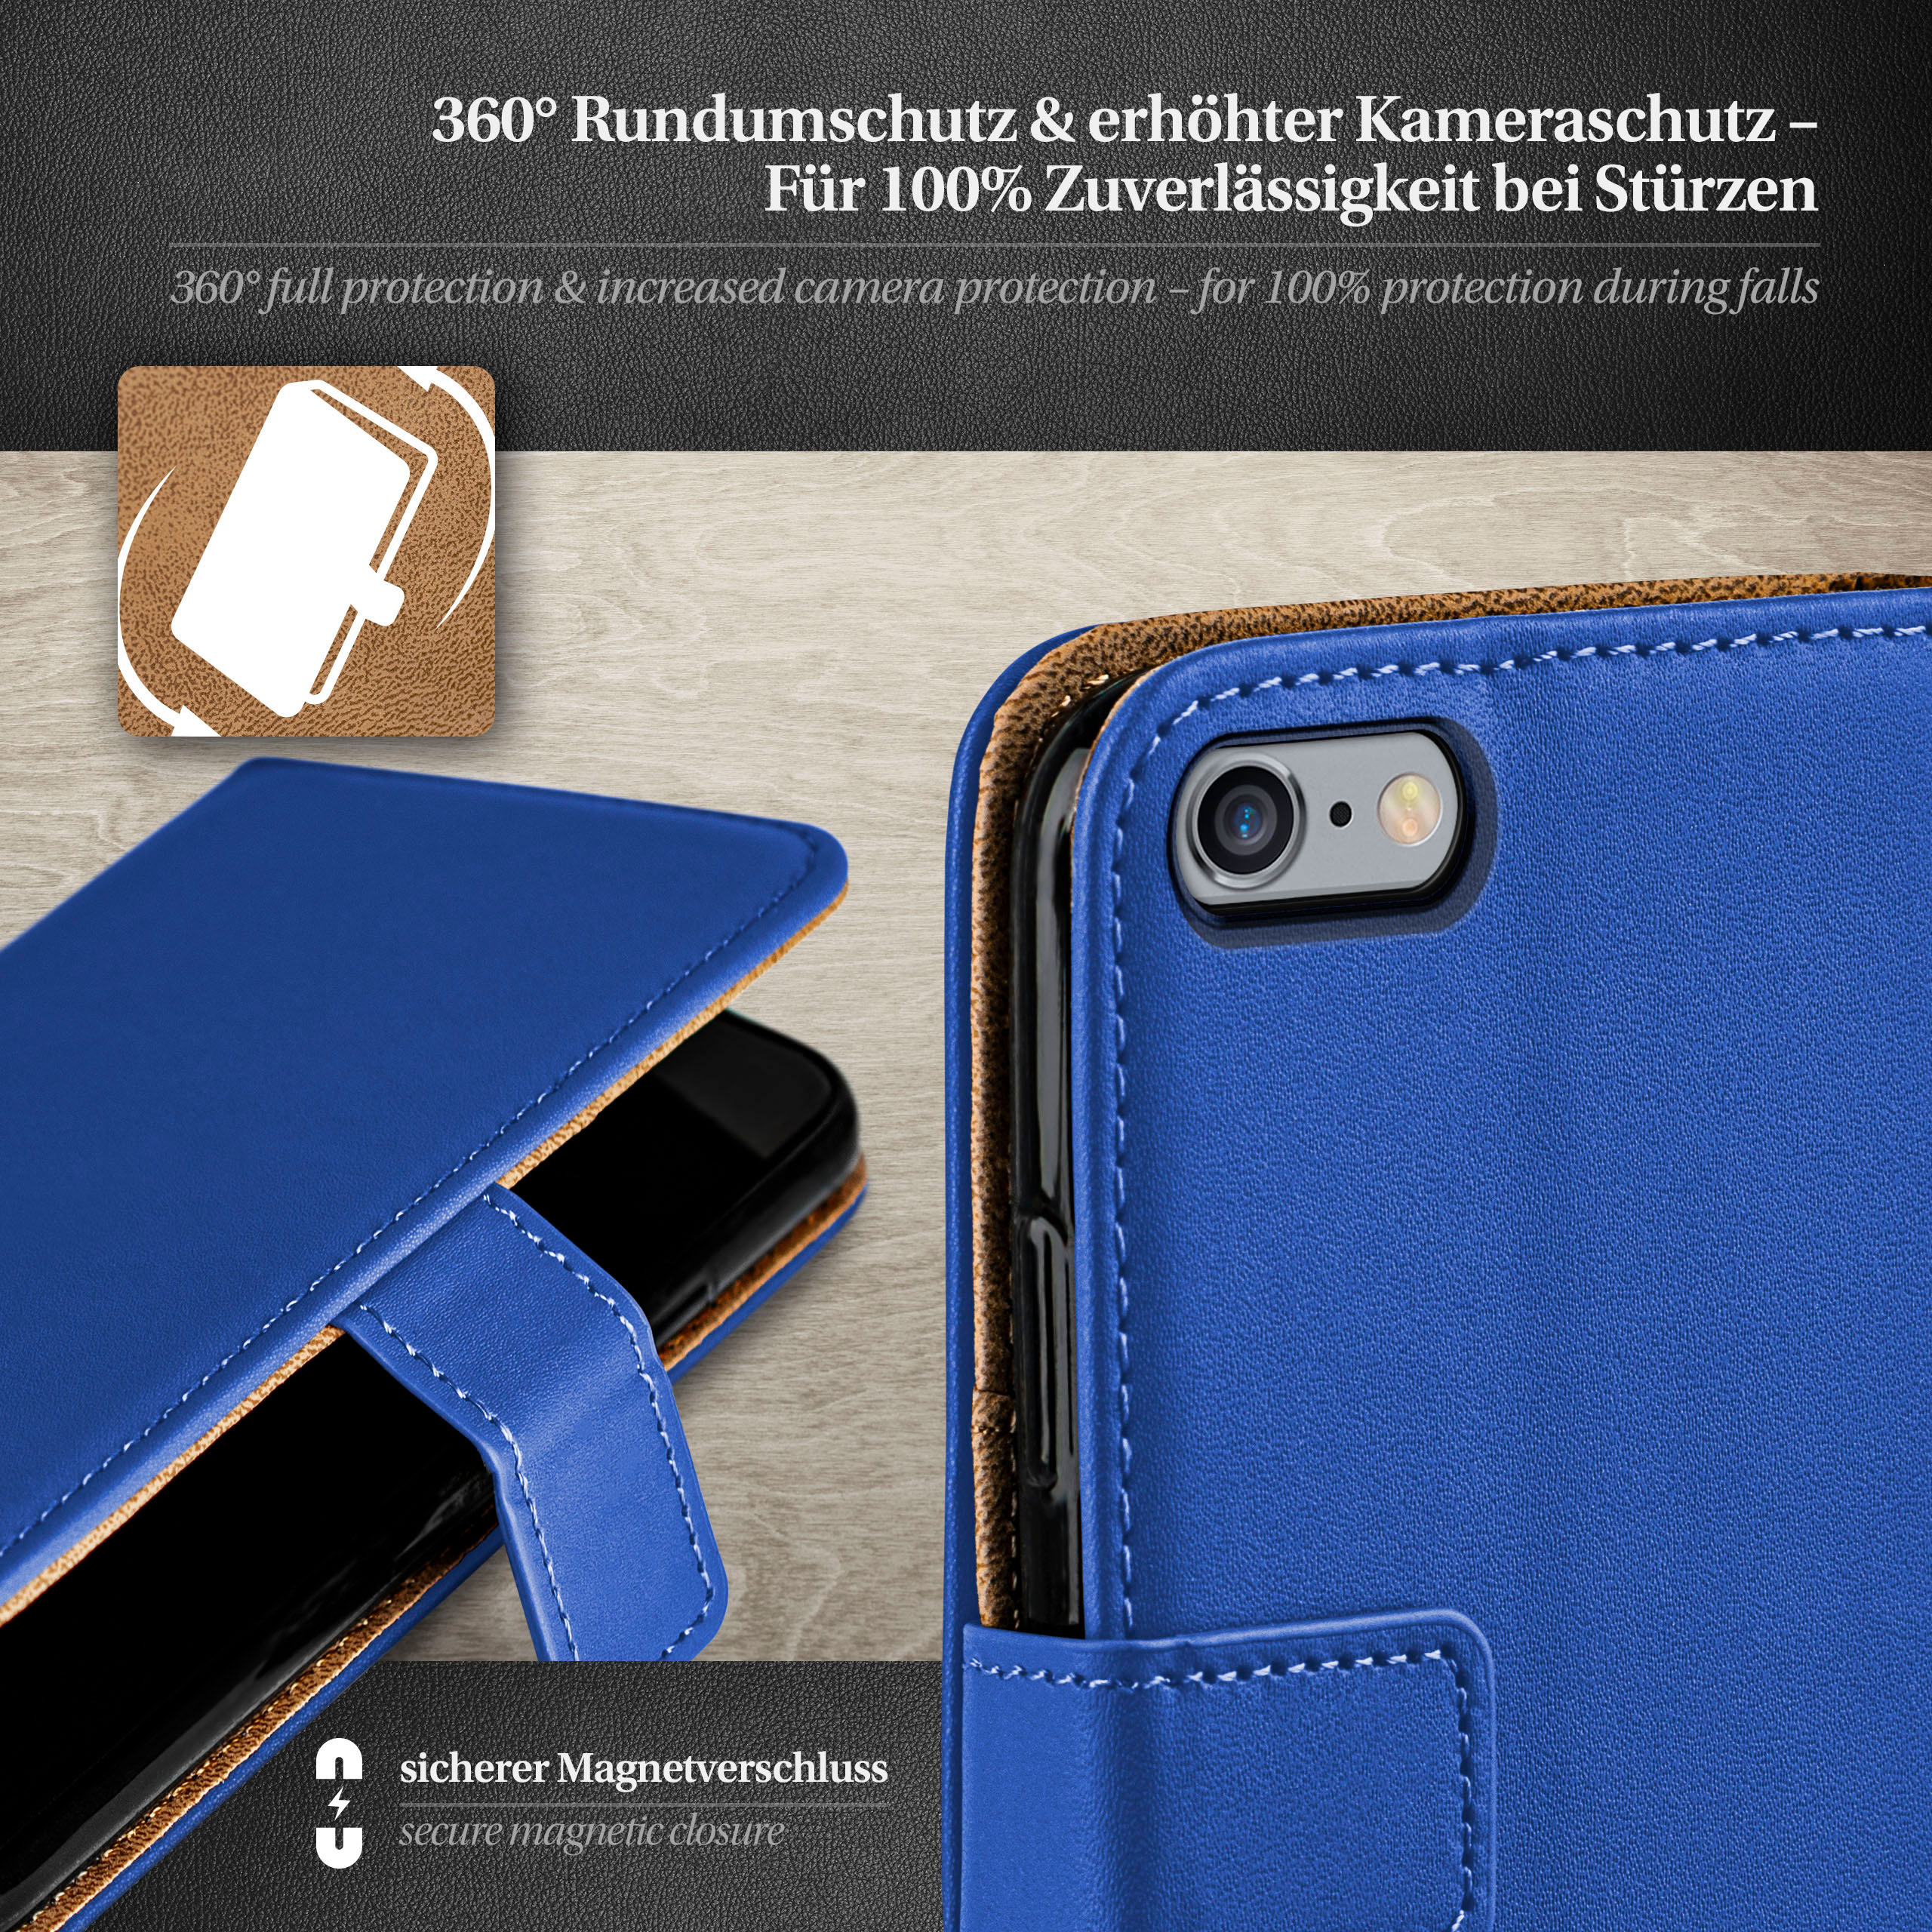 MOEX Book iPhone Plus, Plus Bookcover, Case, / 6s Royal-Blue 6 Apple